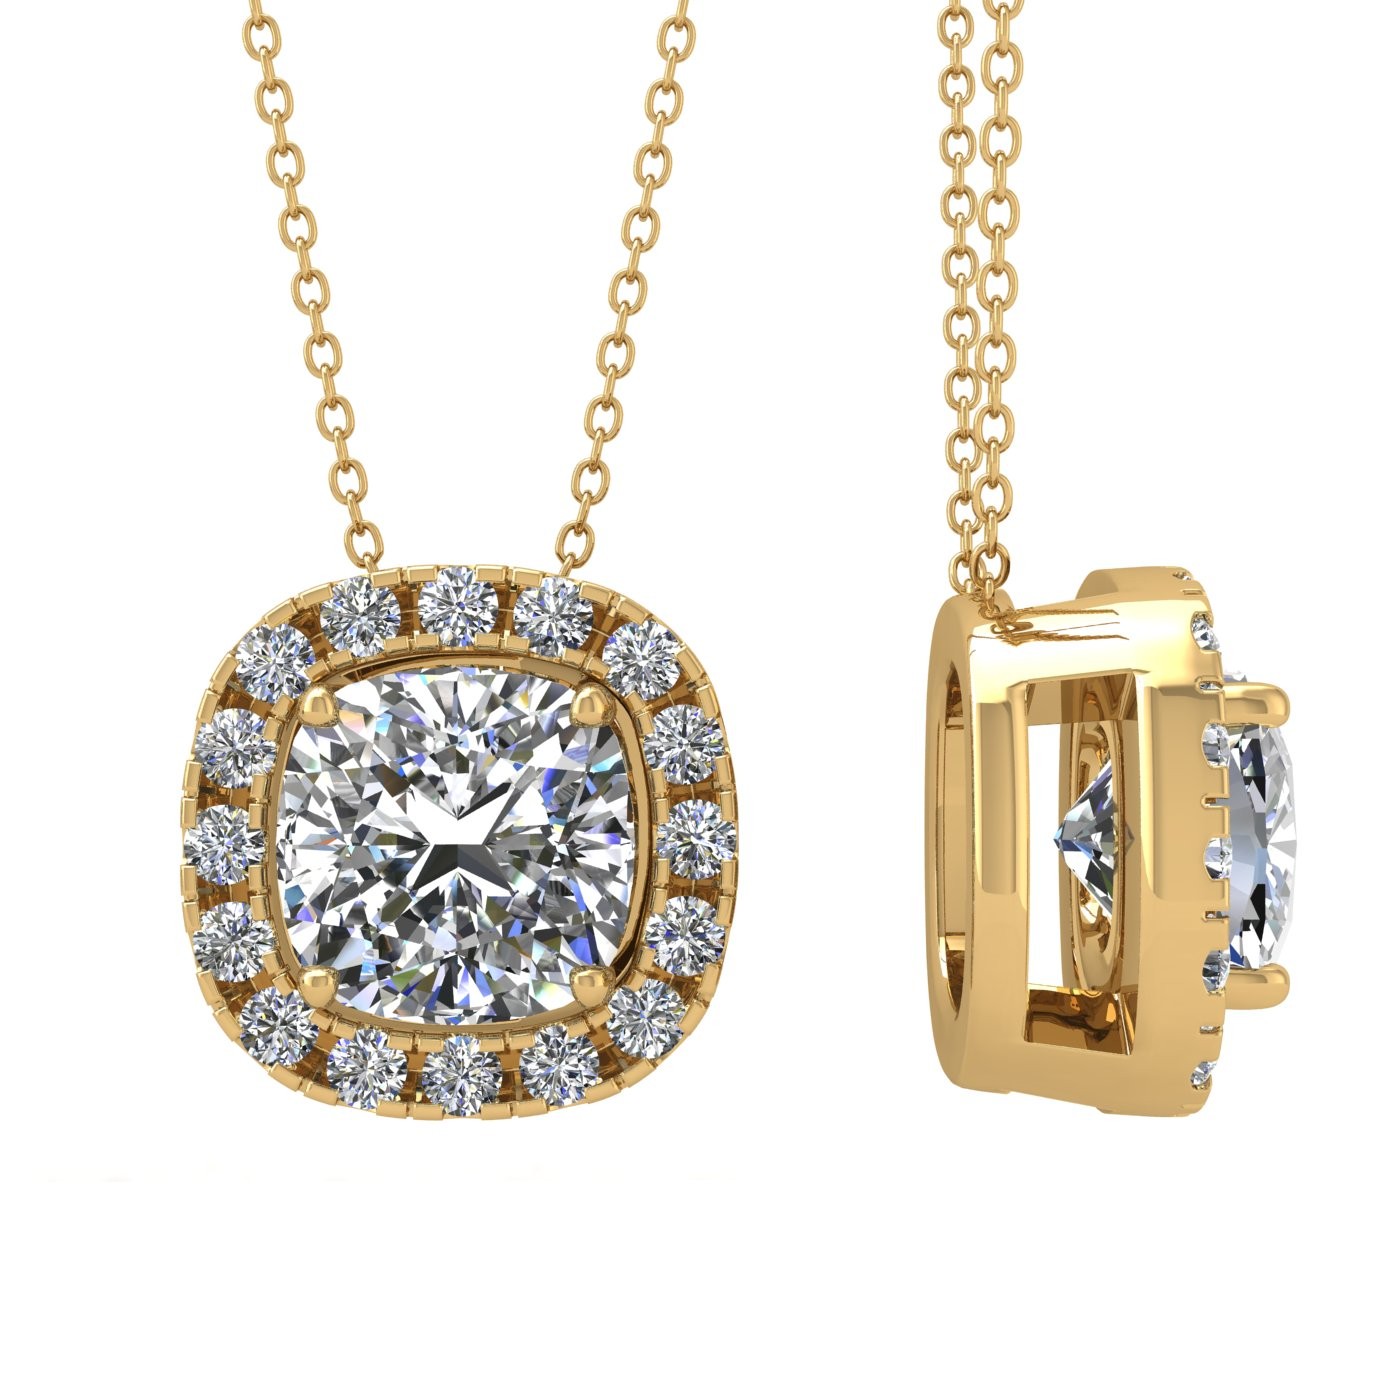 18k yellow gold 1 ct 4 prongs cushion shape diamond pendant with diamond pavÉ set halo Photos & images